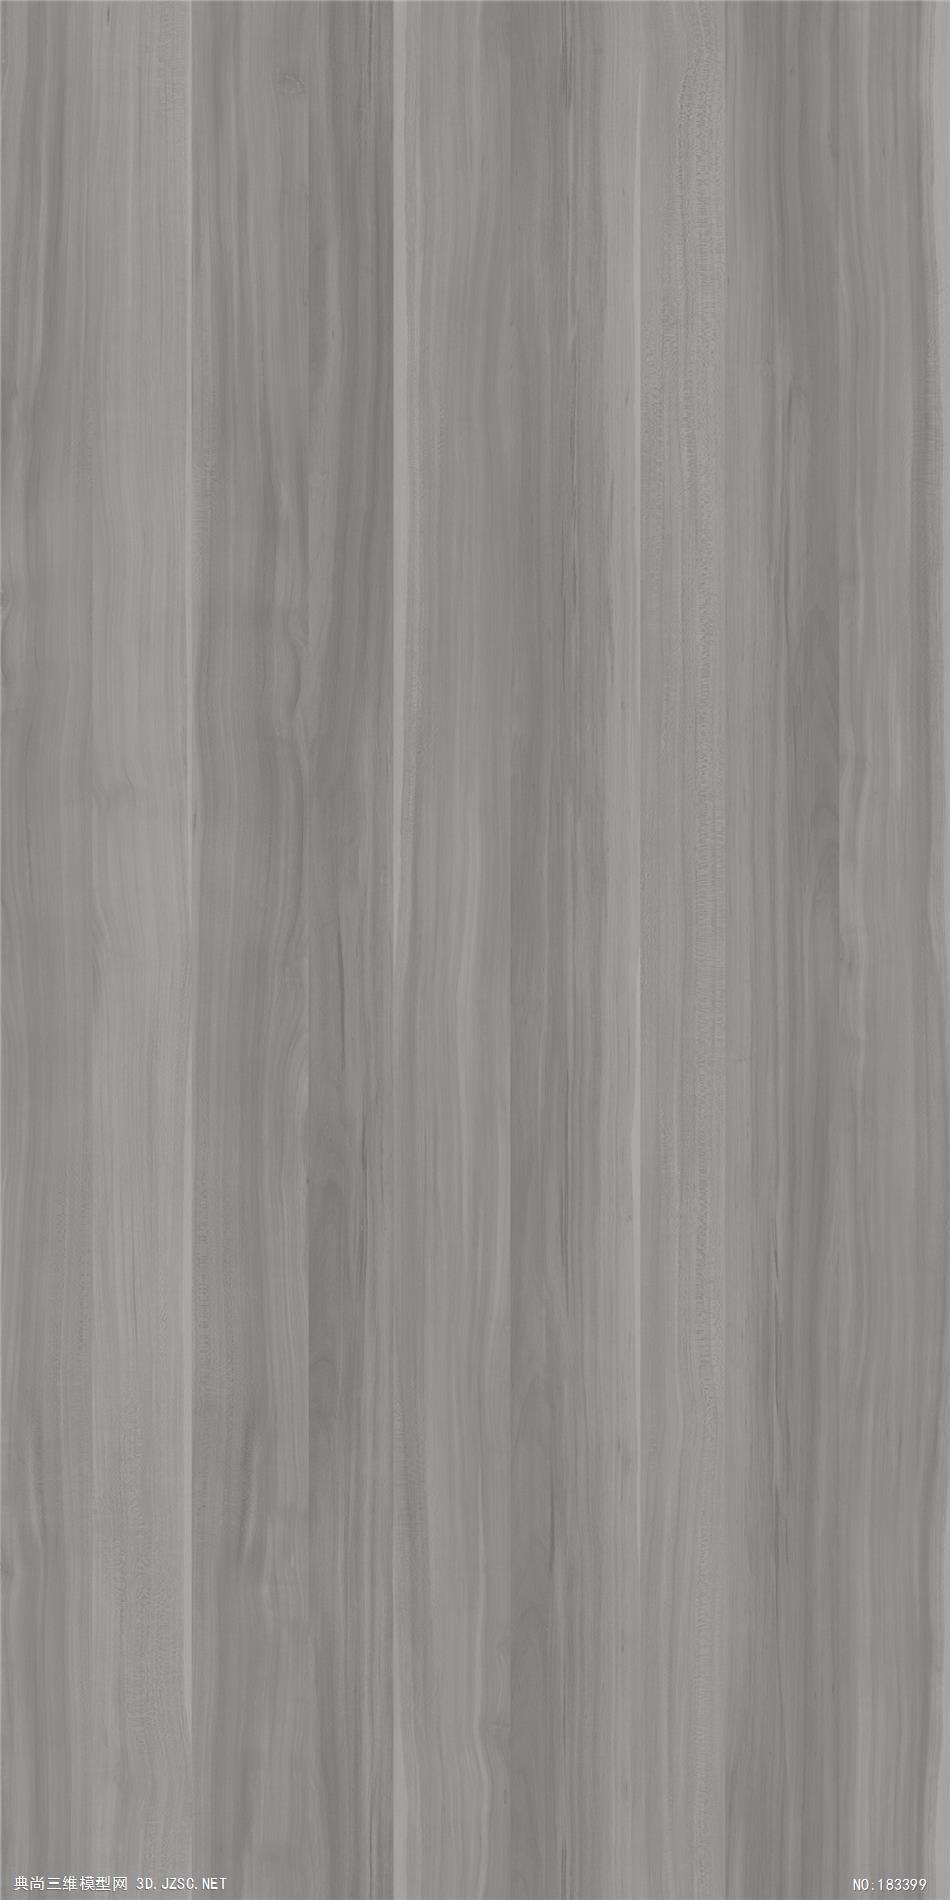 vary材质球pruniervalais木木纹木地板材质贴图